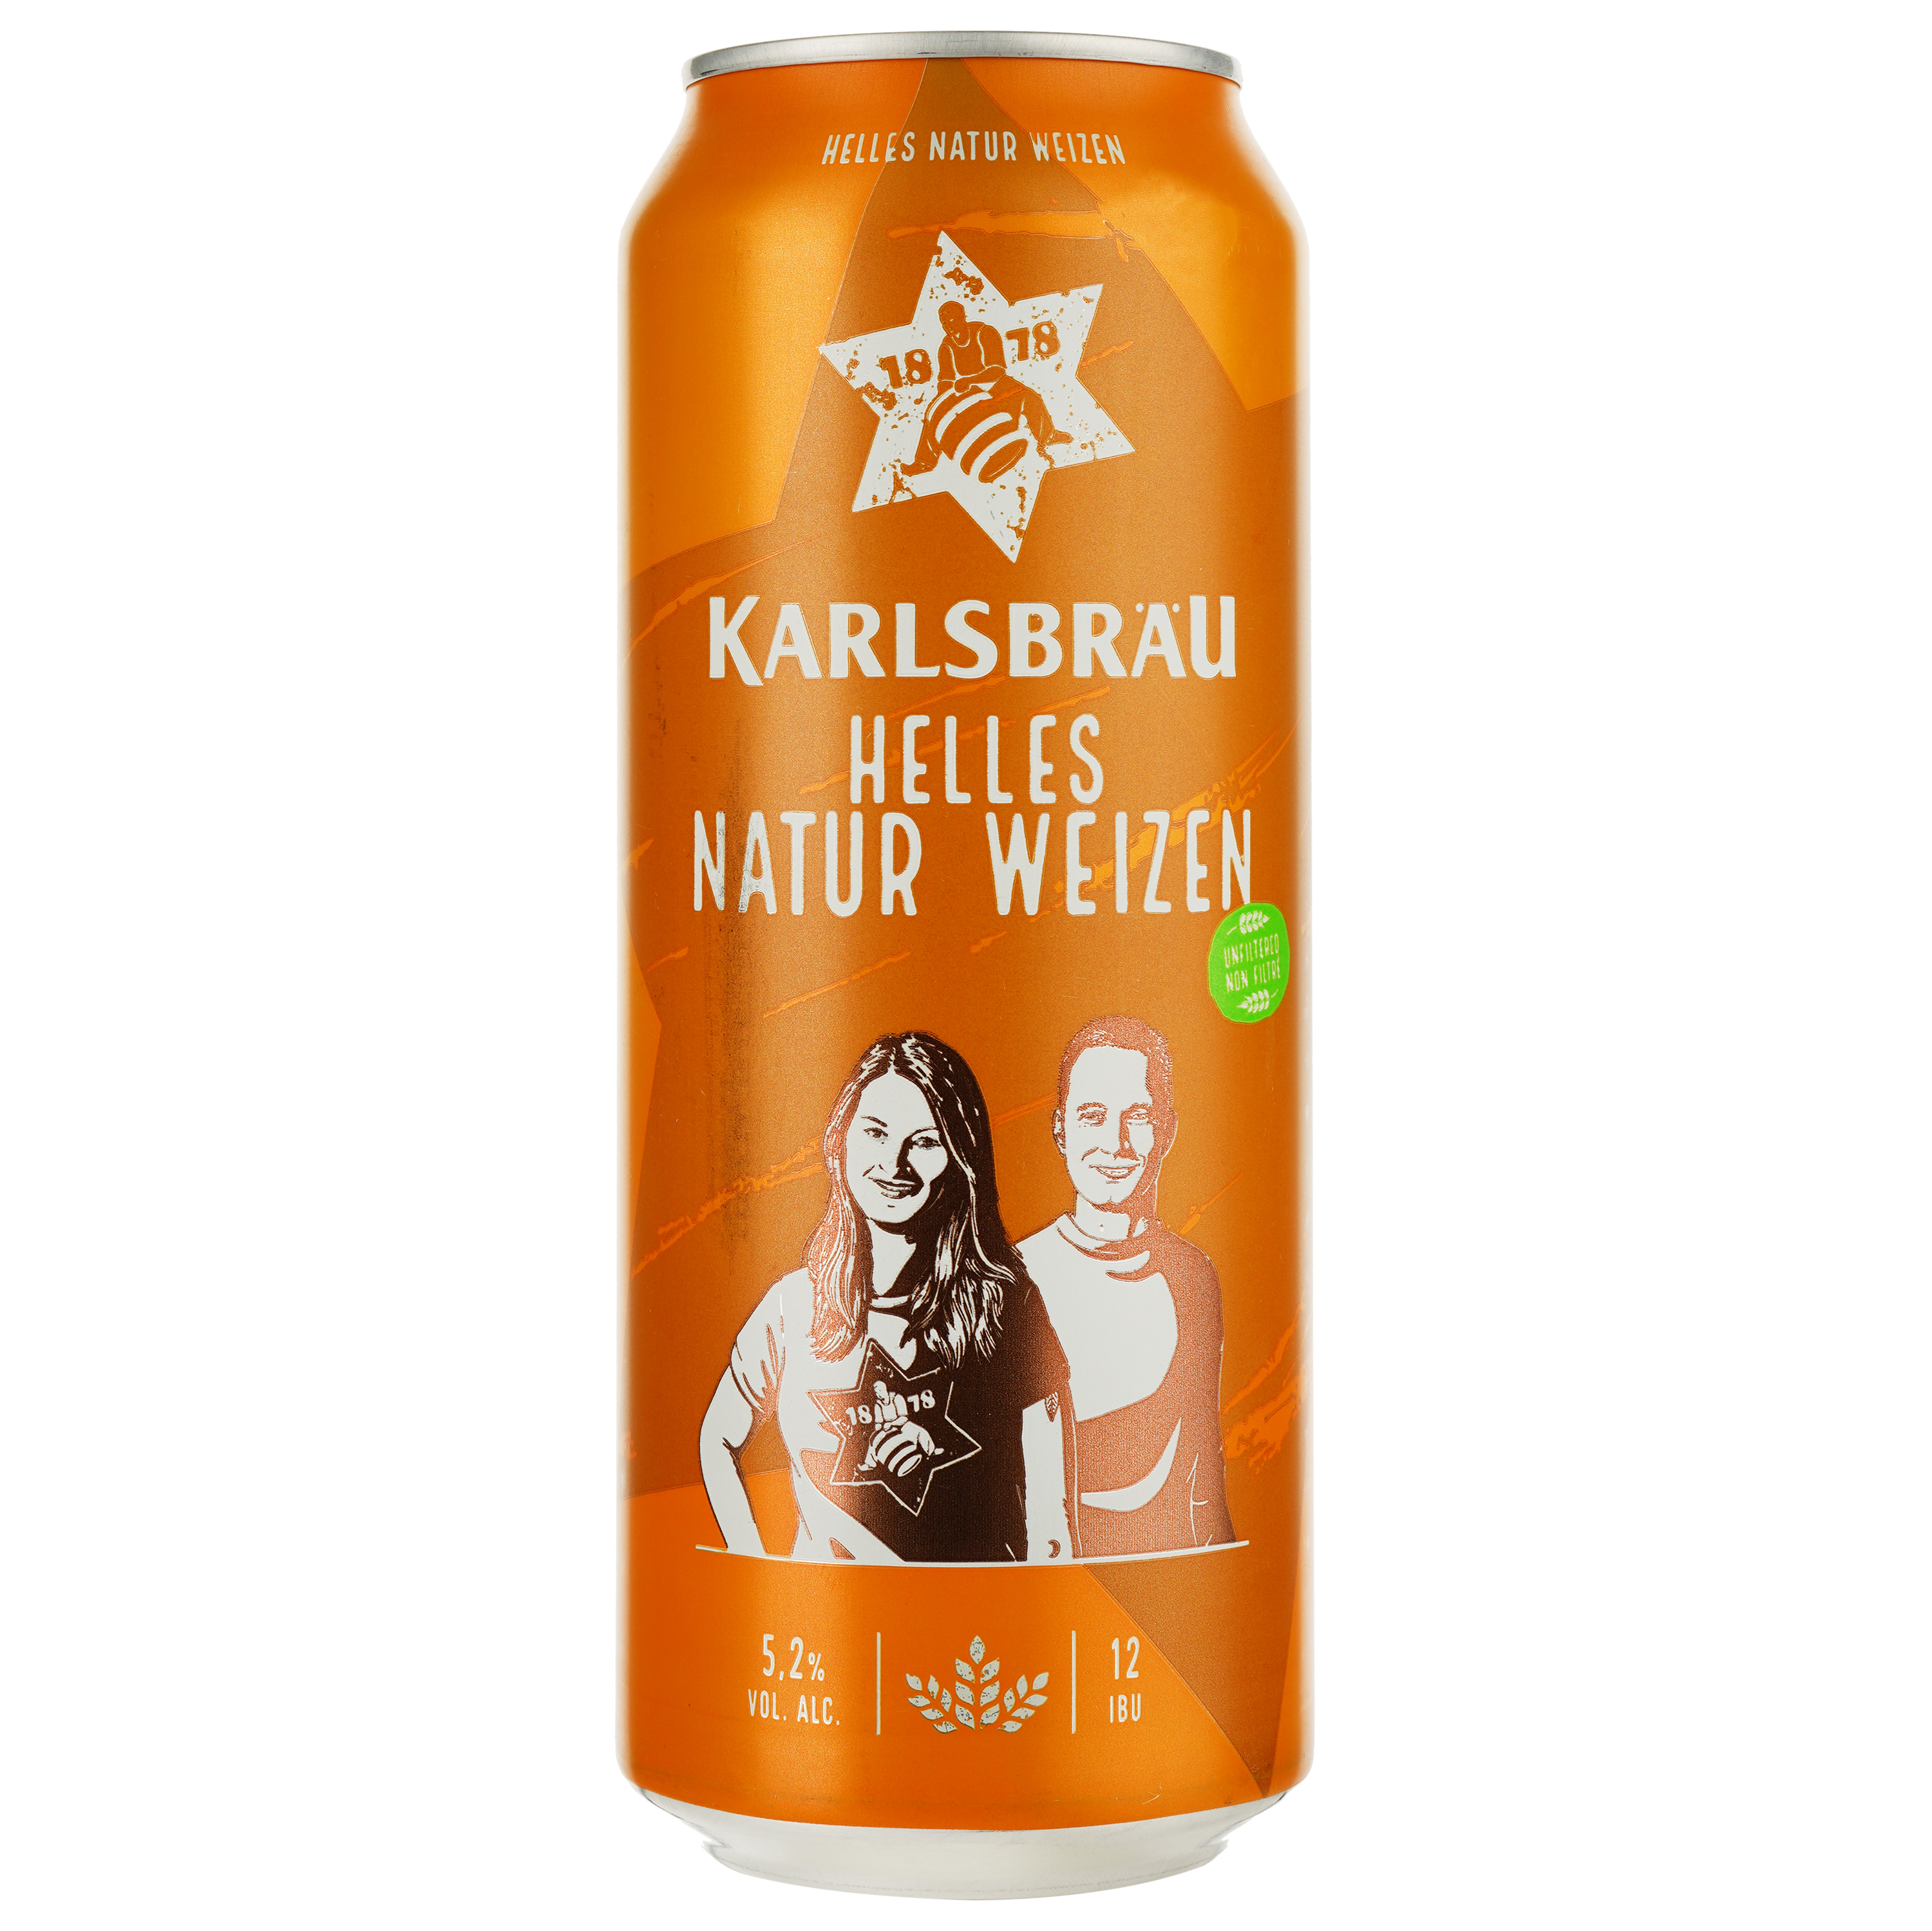 Пиво Karlsbrau Weizen светлое 5.2% 0.5 л ж/б - фото 1